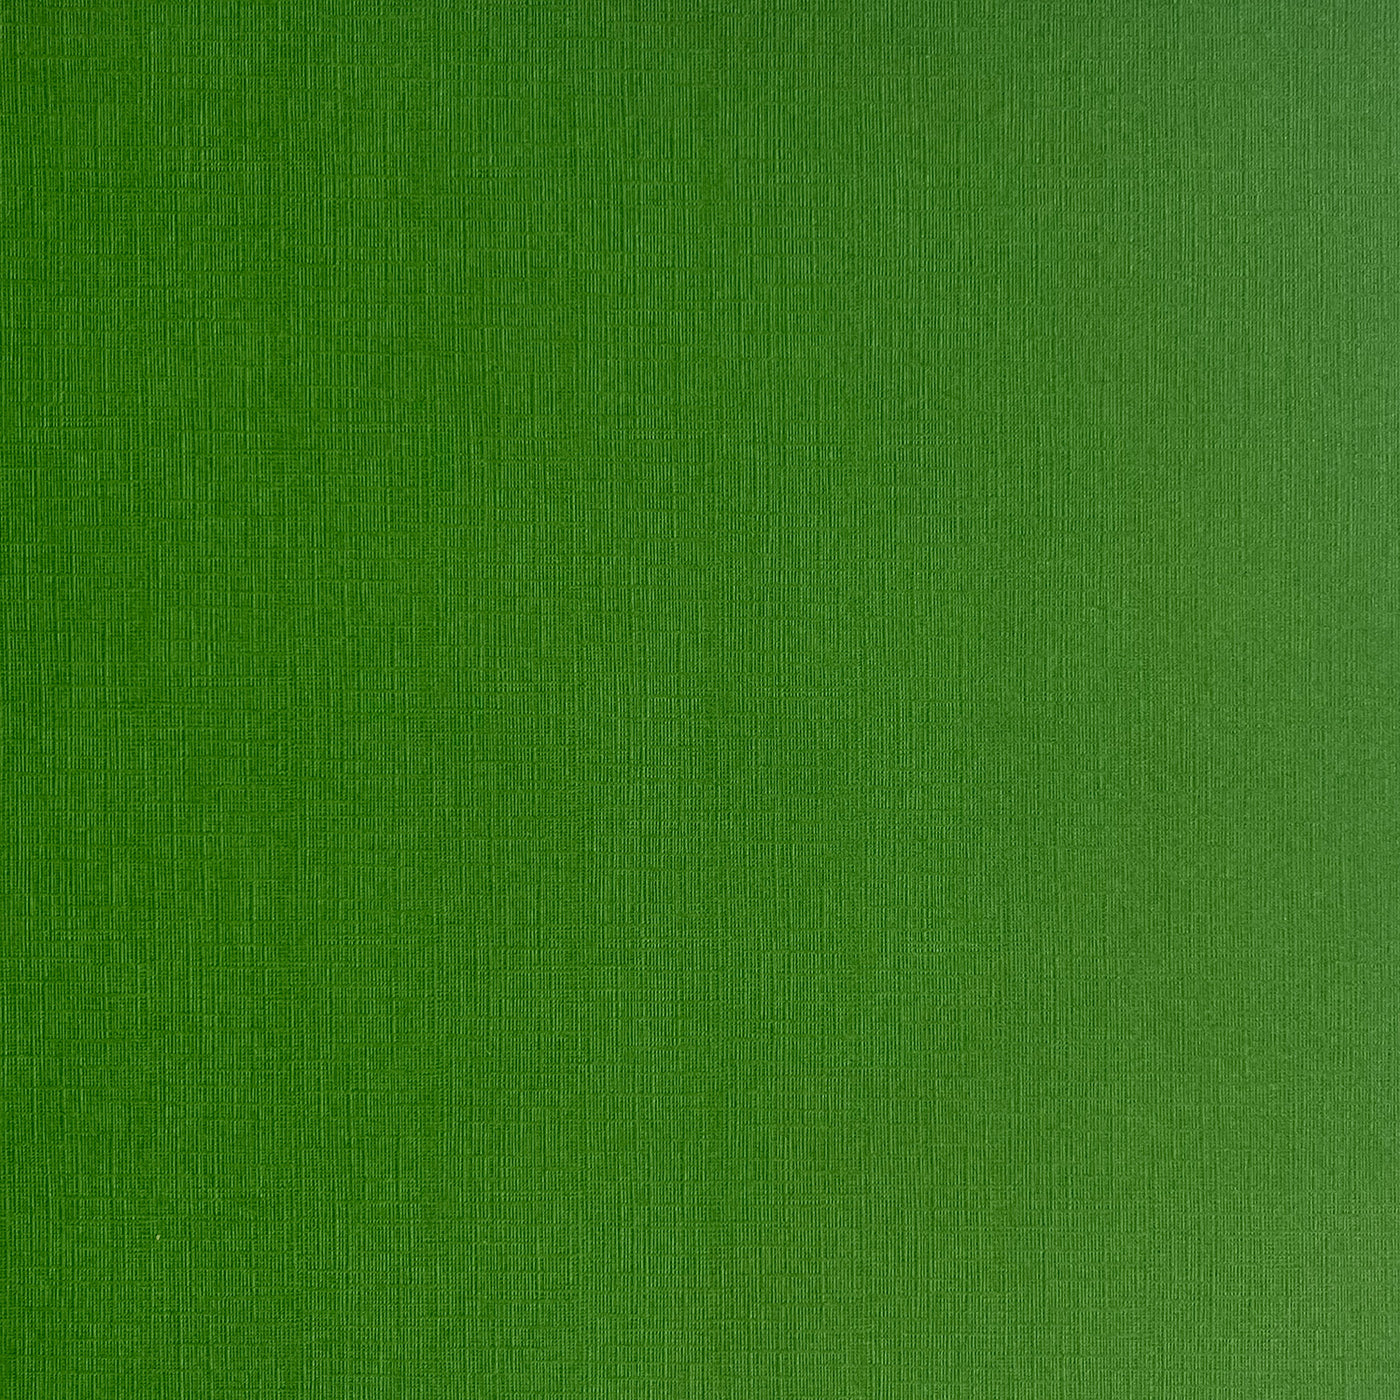 Parrot - Textured 12x12 Cardstock - Forest green canvas scrapbook paper